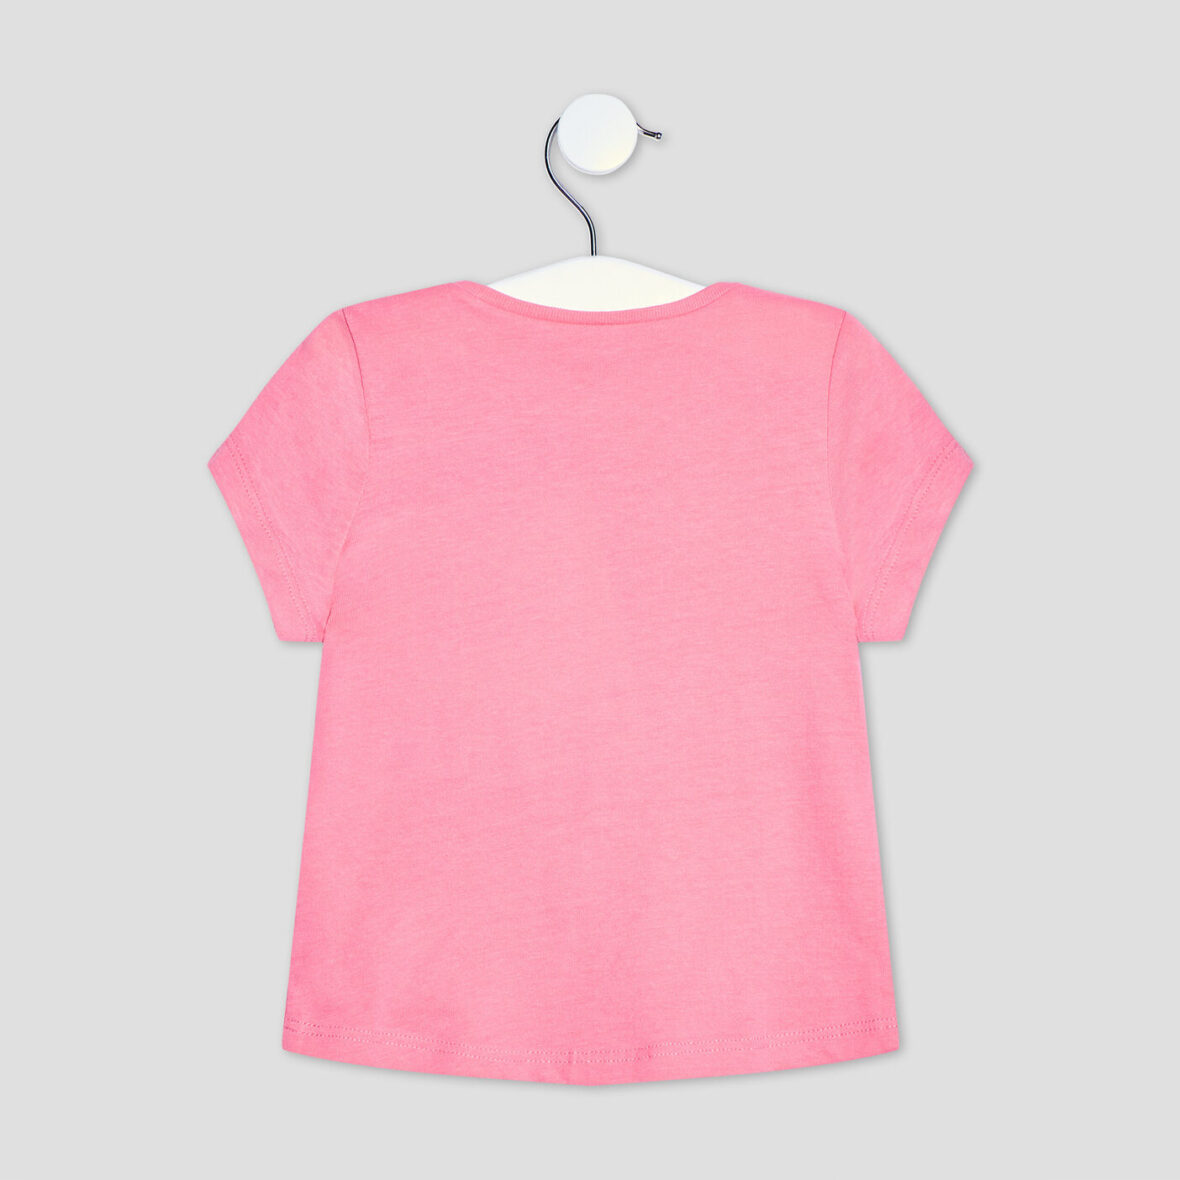 t-shirt-manches-courtes-rose-fushia-bebef-a-36165600376651075